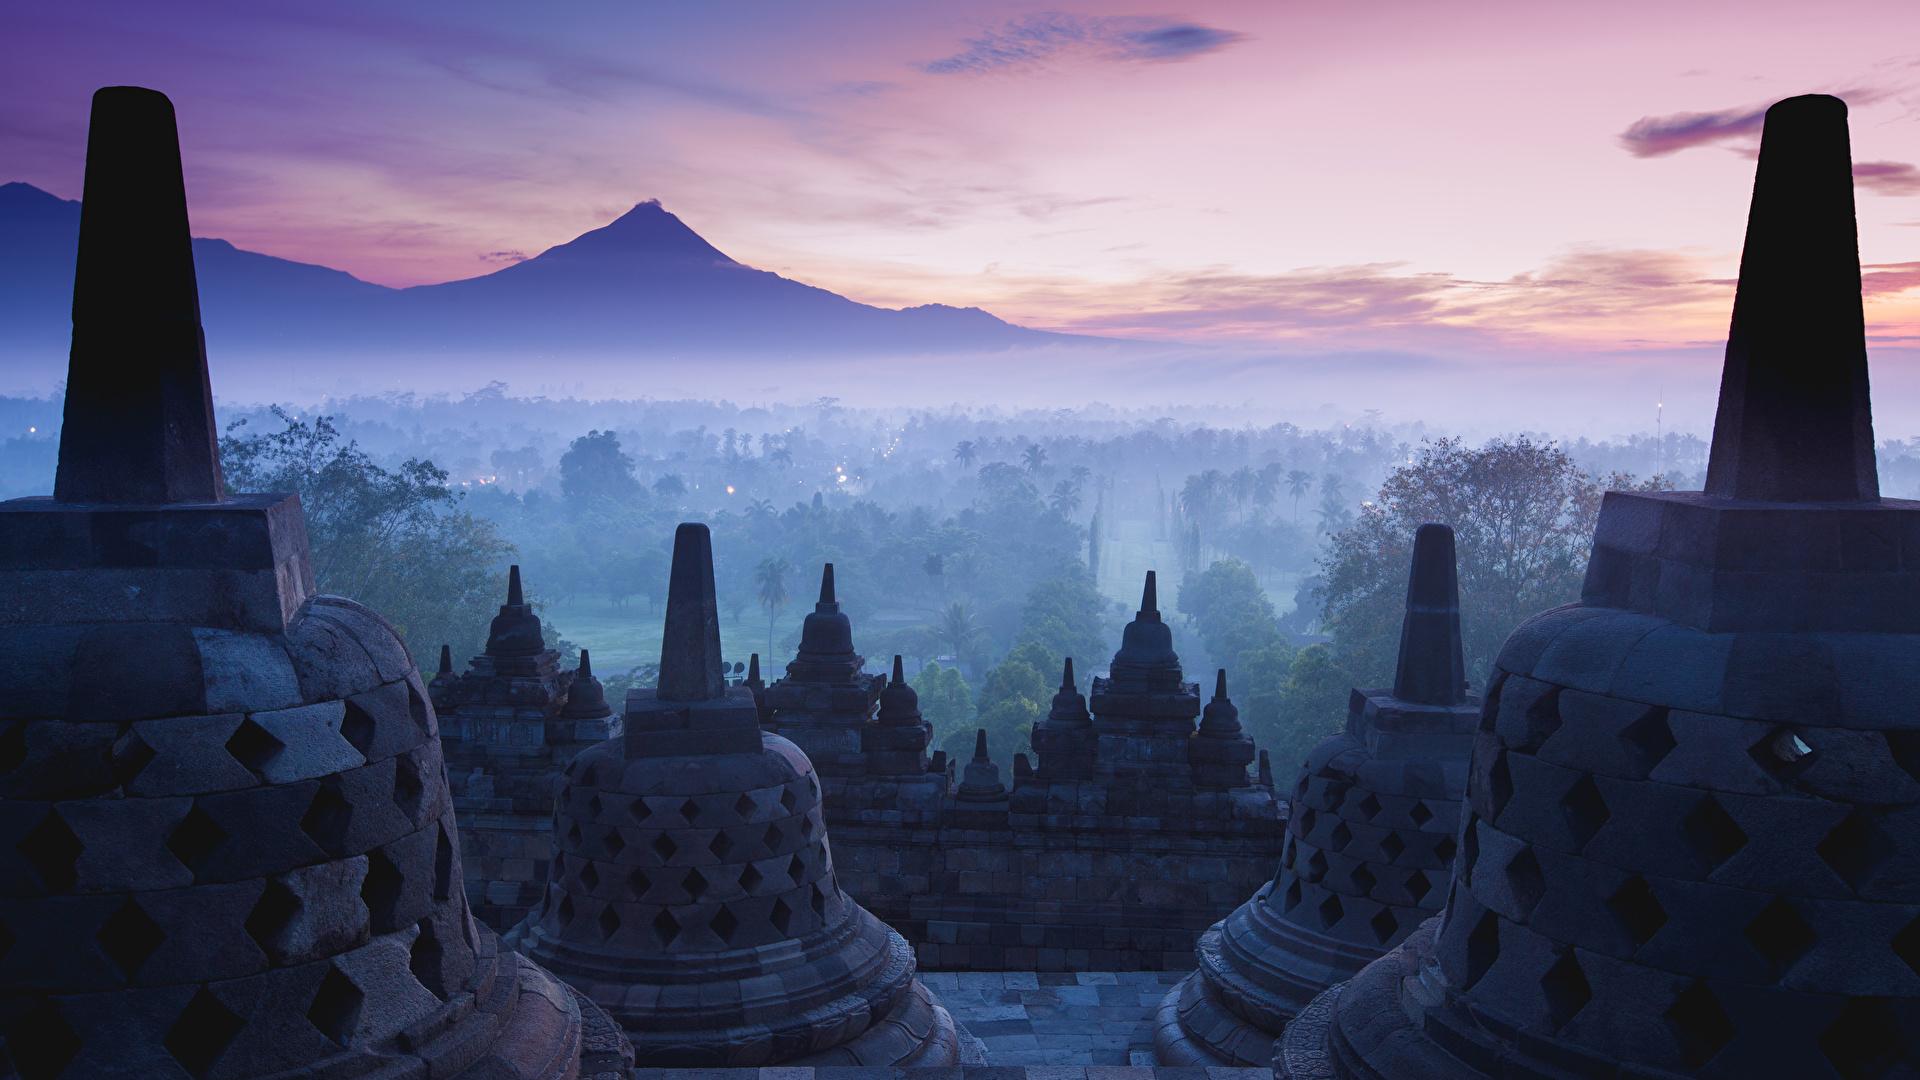 Image Indonesia Yogyakarta Java Fog Temples Cities 1920x1080